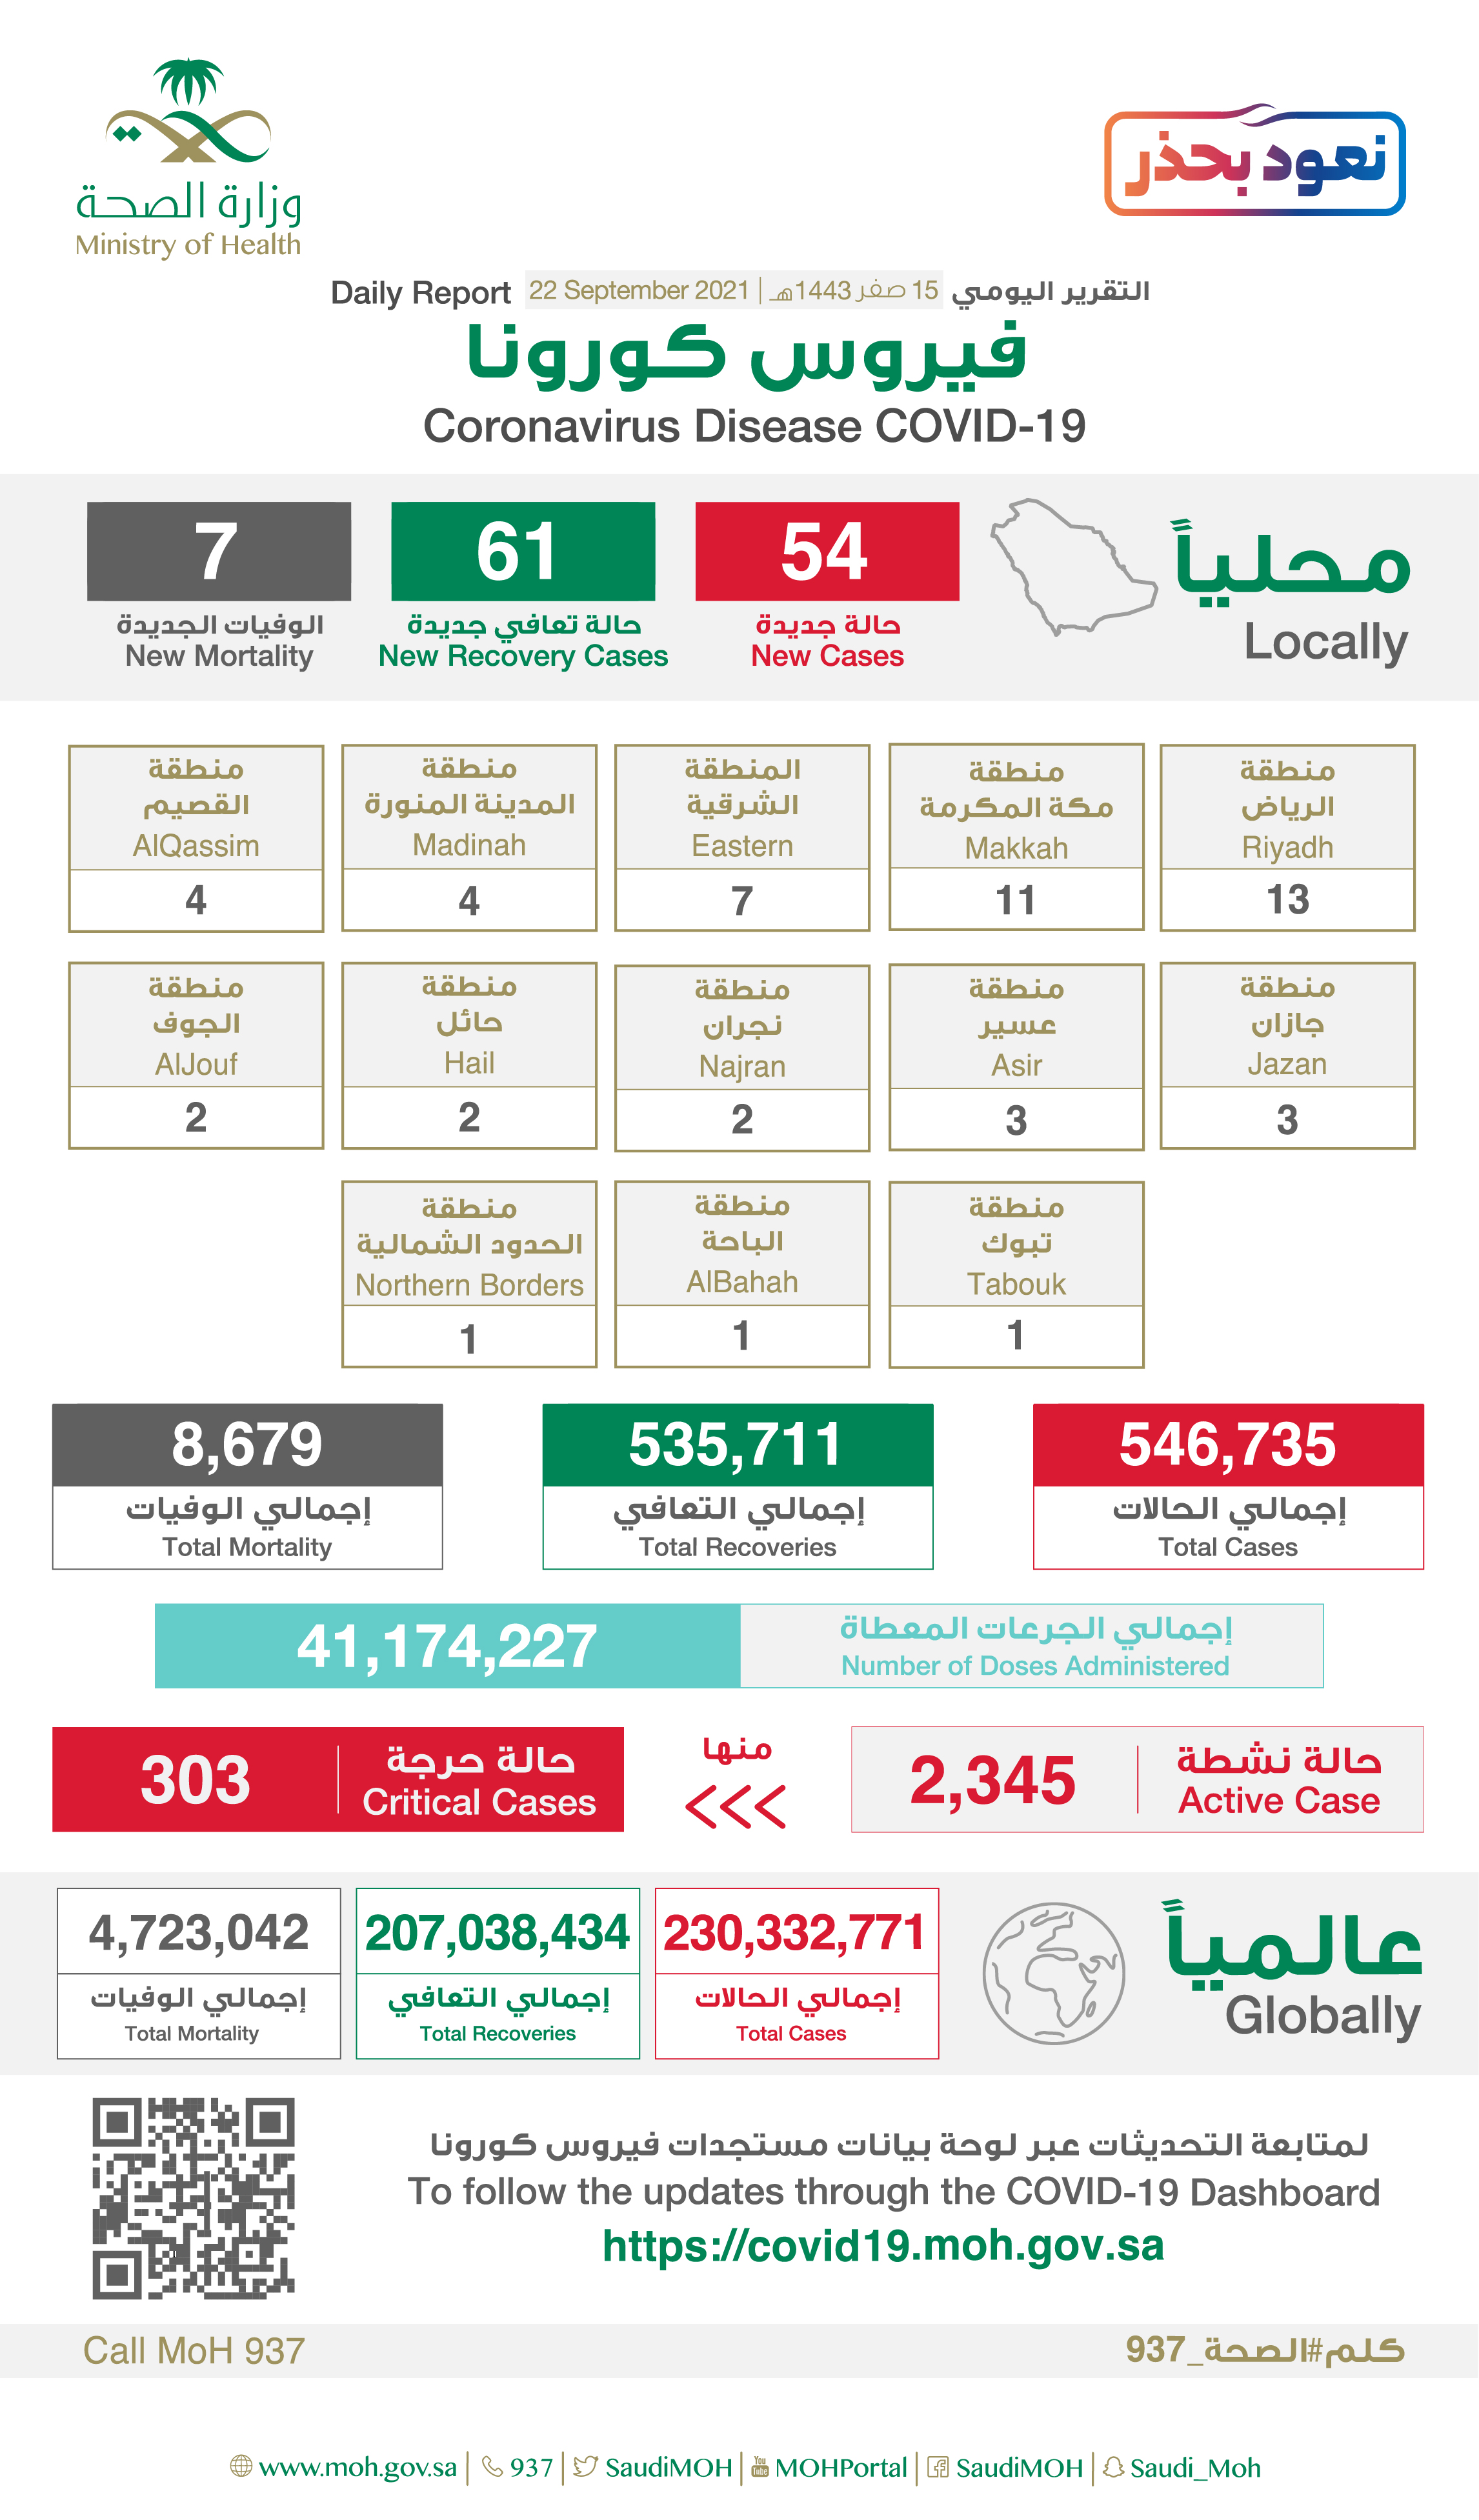 Saudi Arabia Coronavirus : Total Cases : 546,735, New Cases : 54, Cured : 535,711 , Deaths: 8,679, Active Cases : 2,345